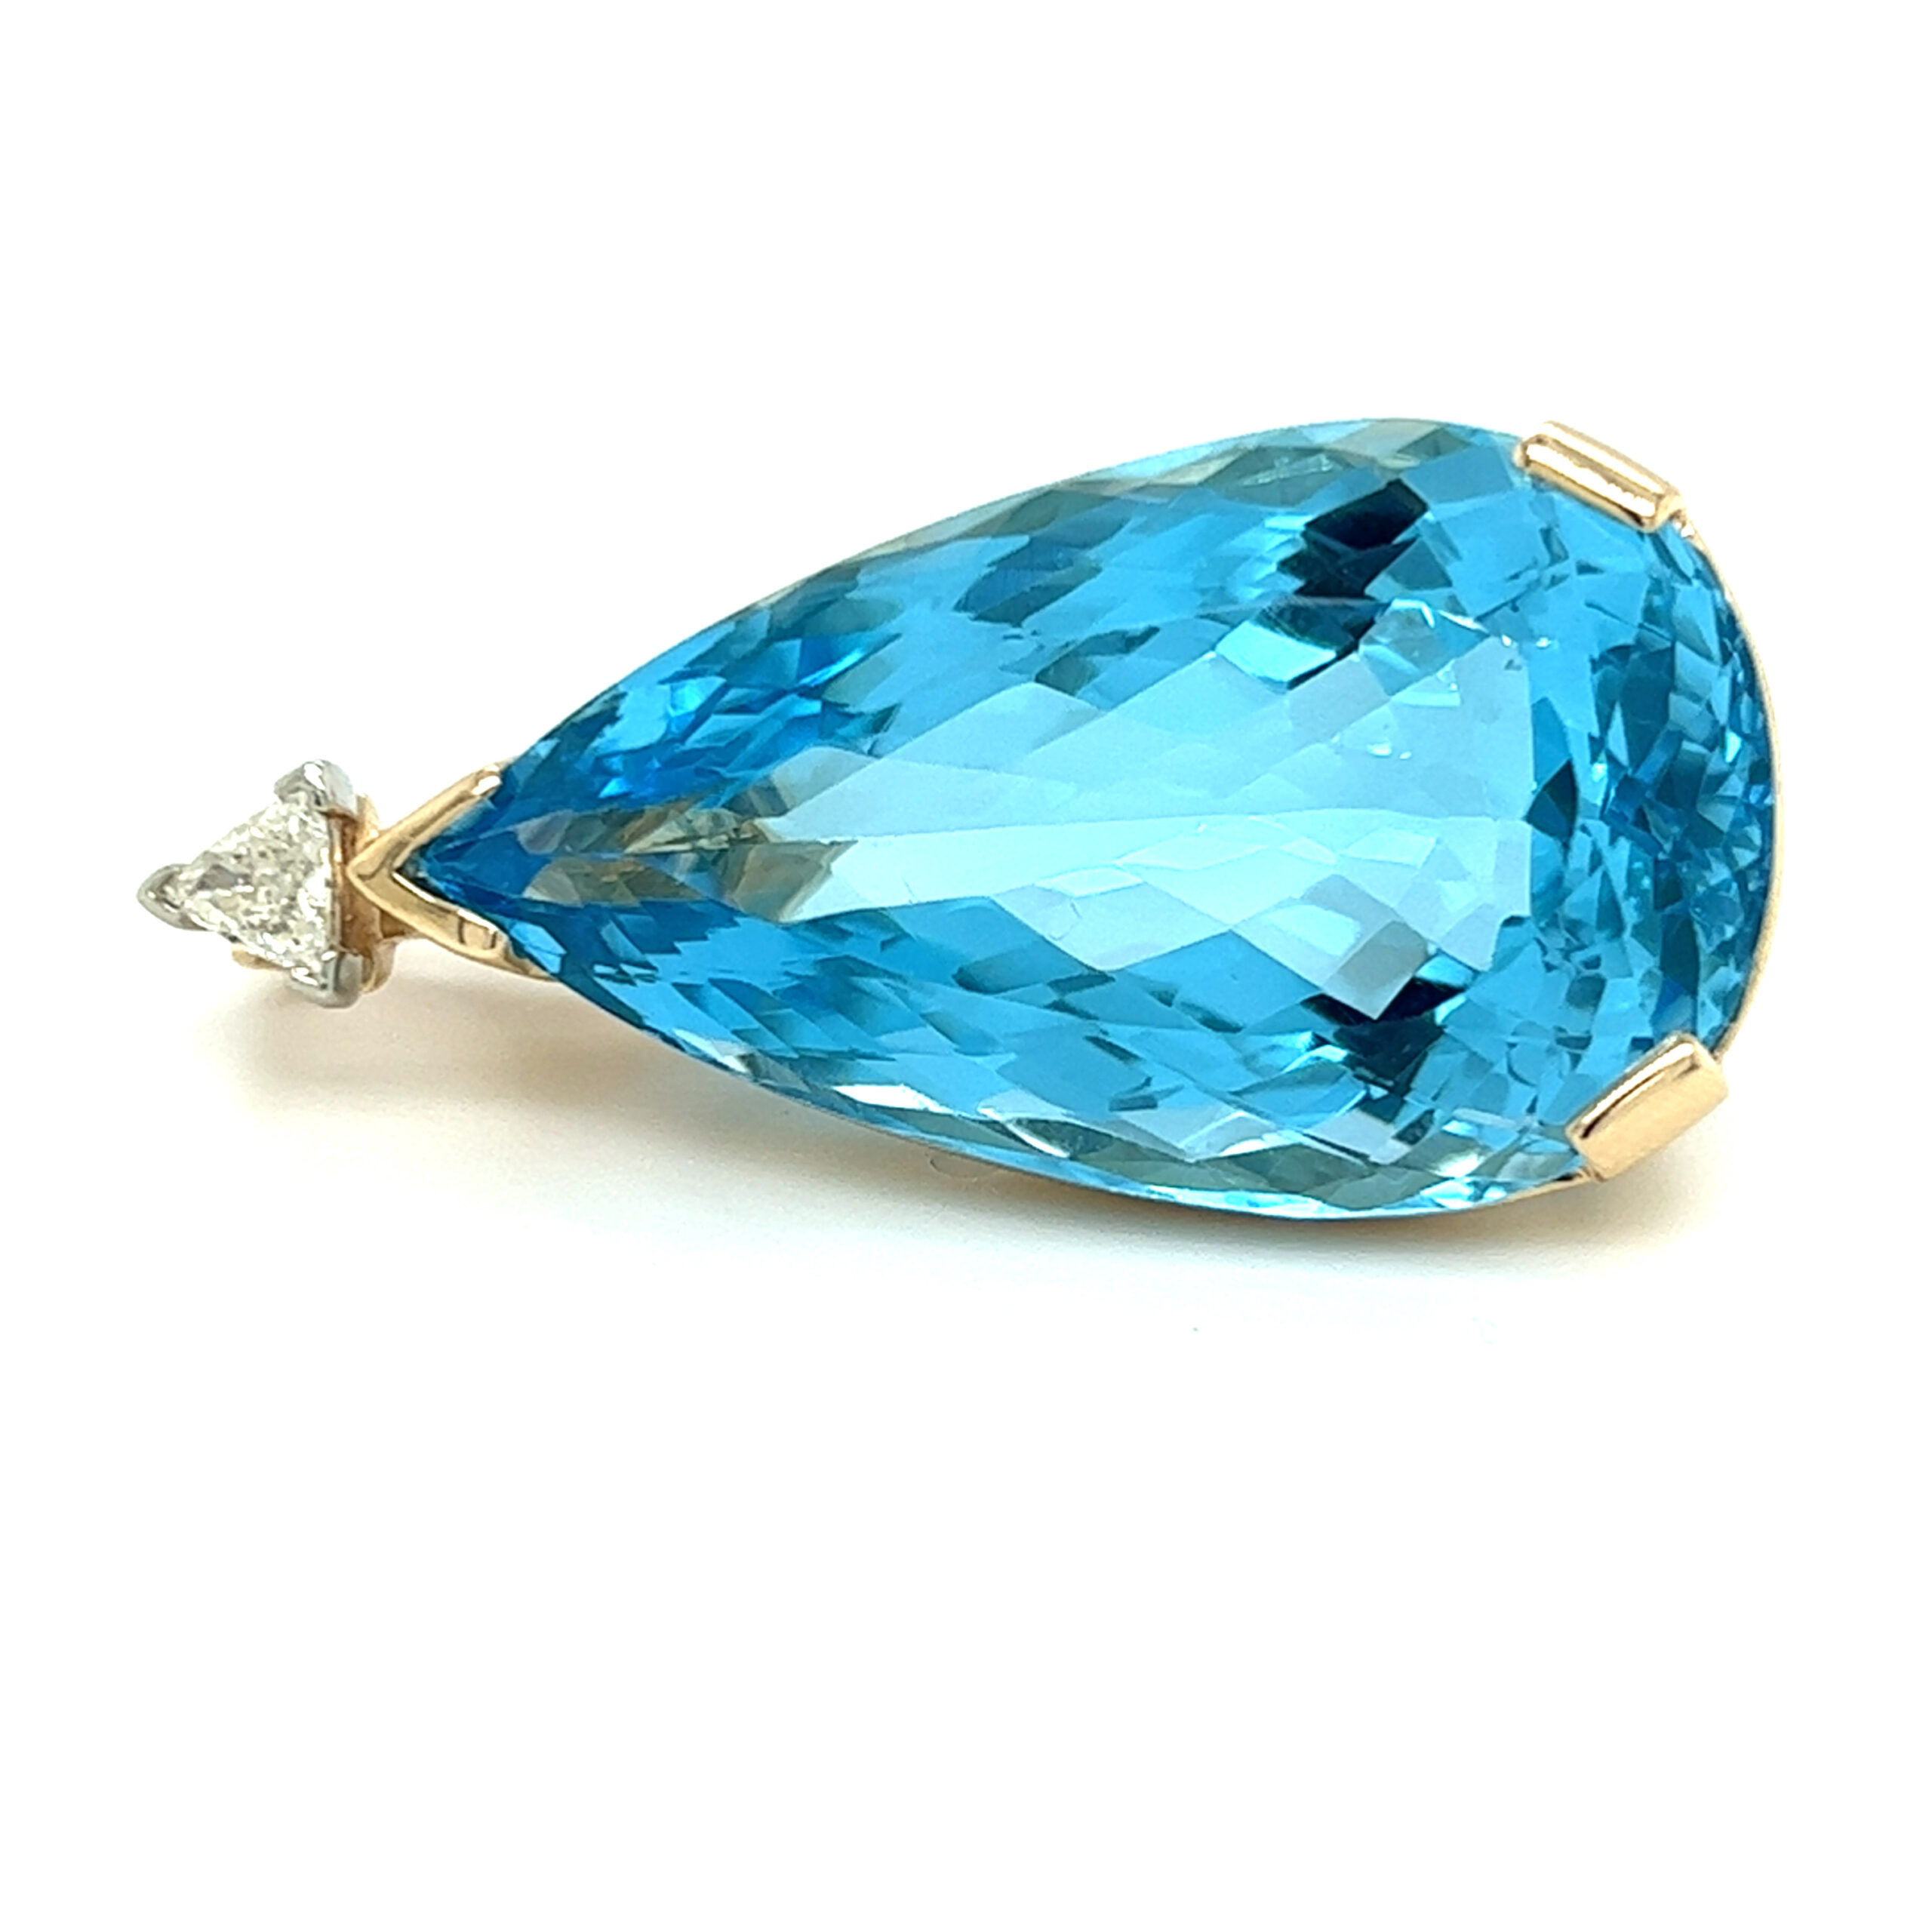 An estate 14 karat gold enhancer pendant with a 33.75x12.7mm pear-shaped blue topaz